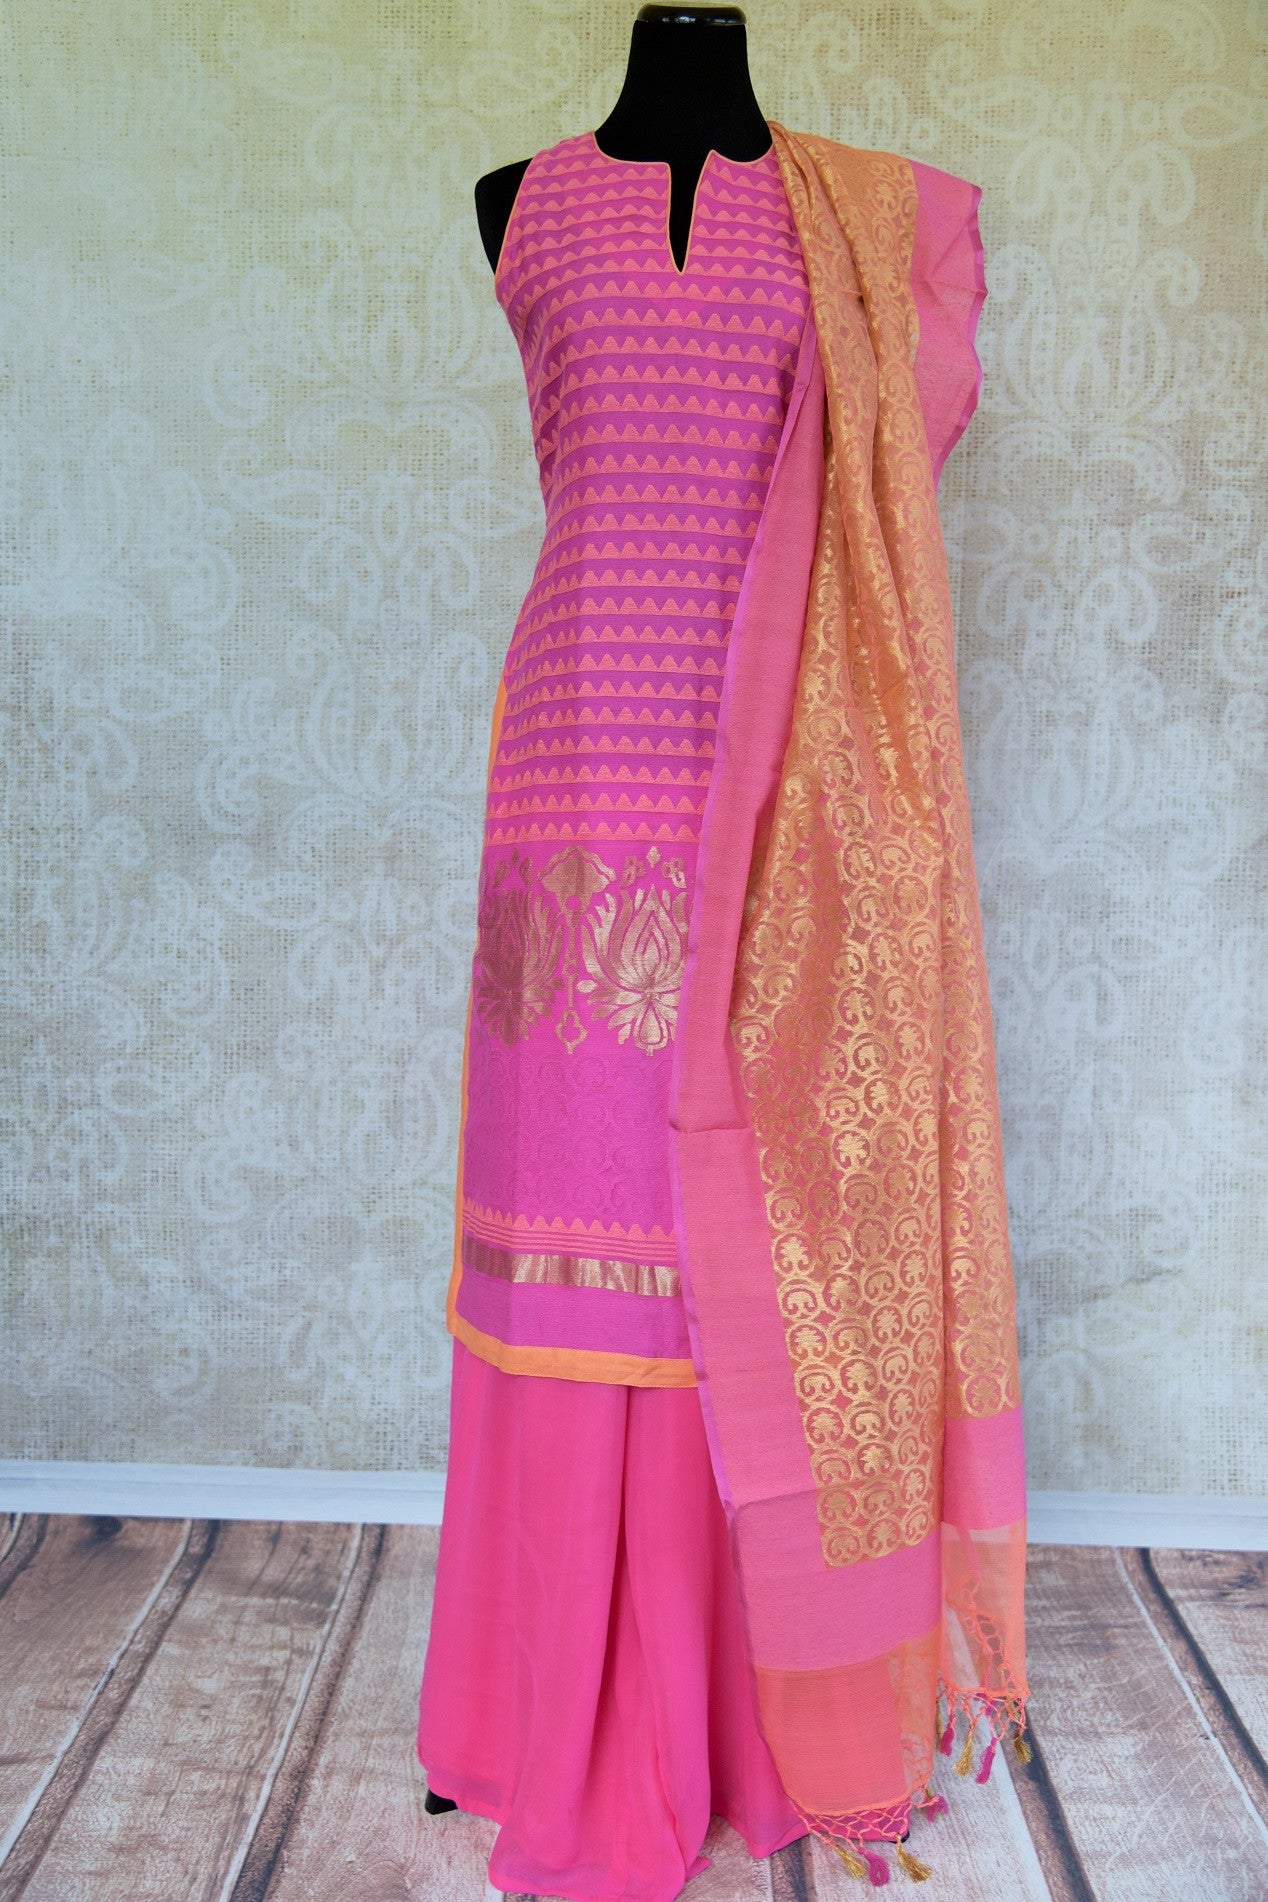 501011-suit-sleeveless-pink-geometric-pattern-golden-lotus-scarf-alternate-view